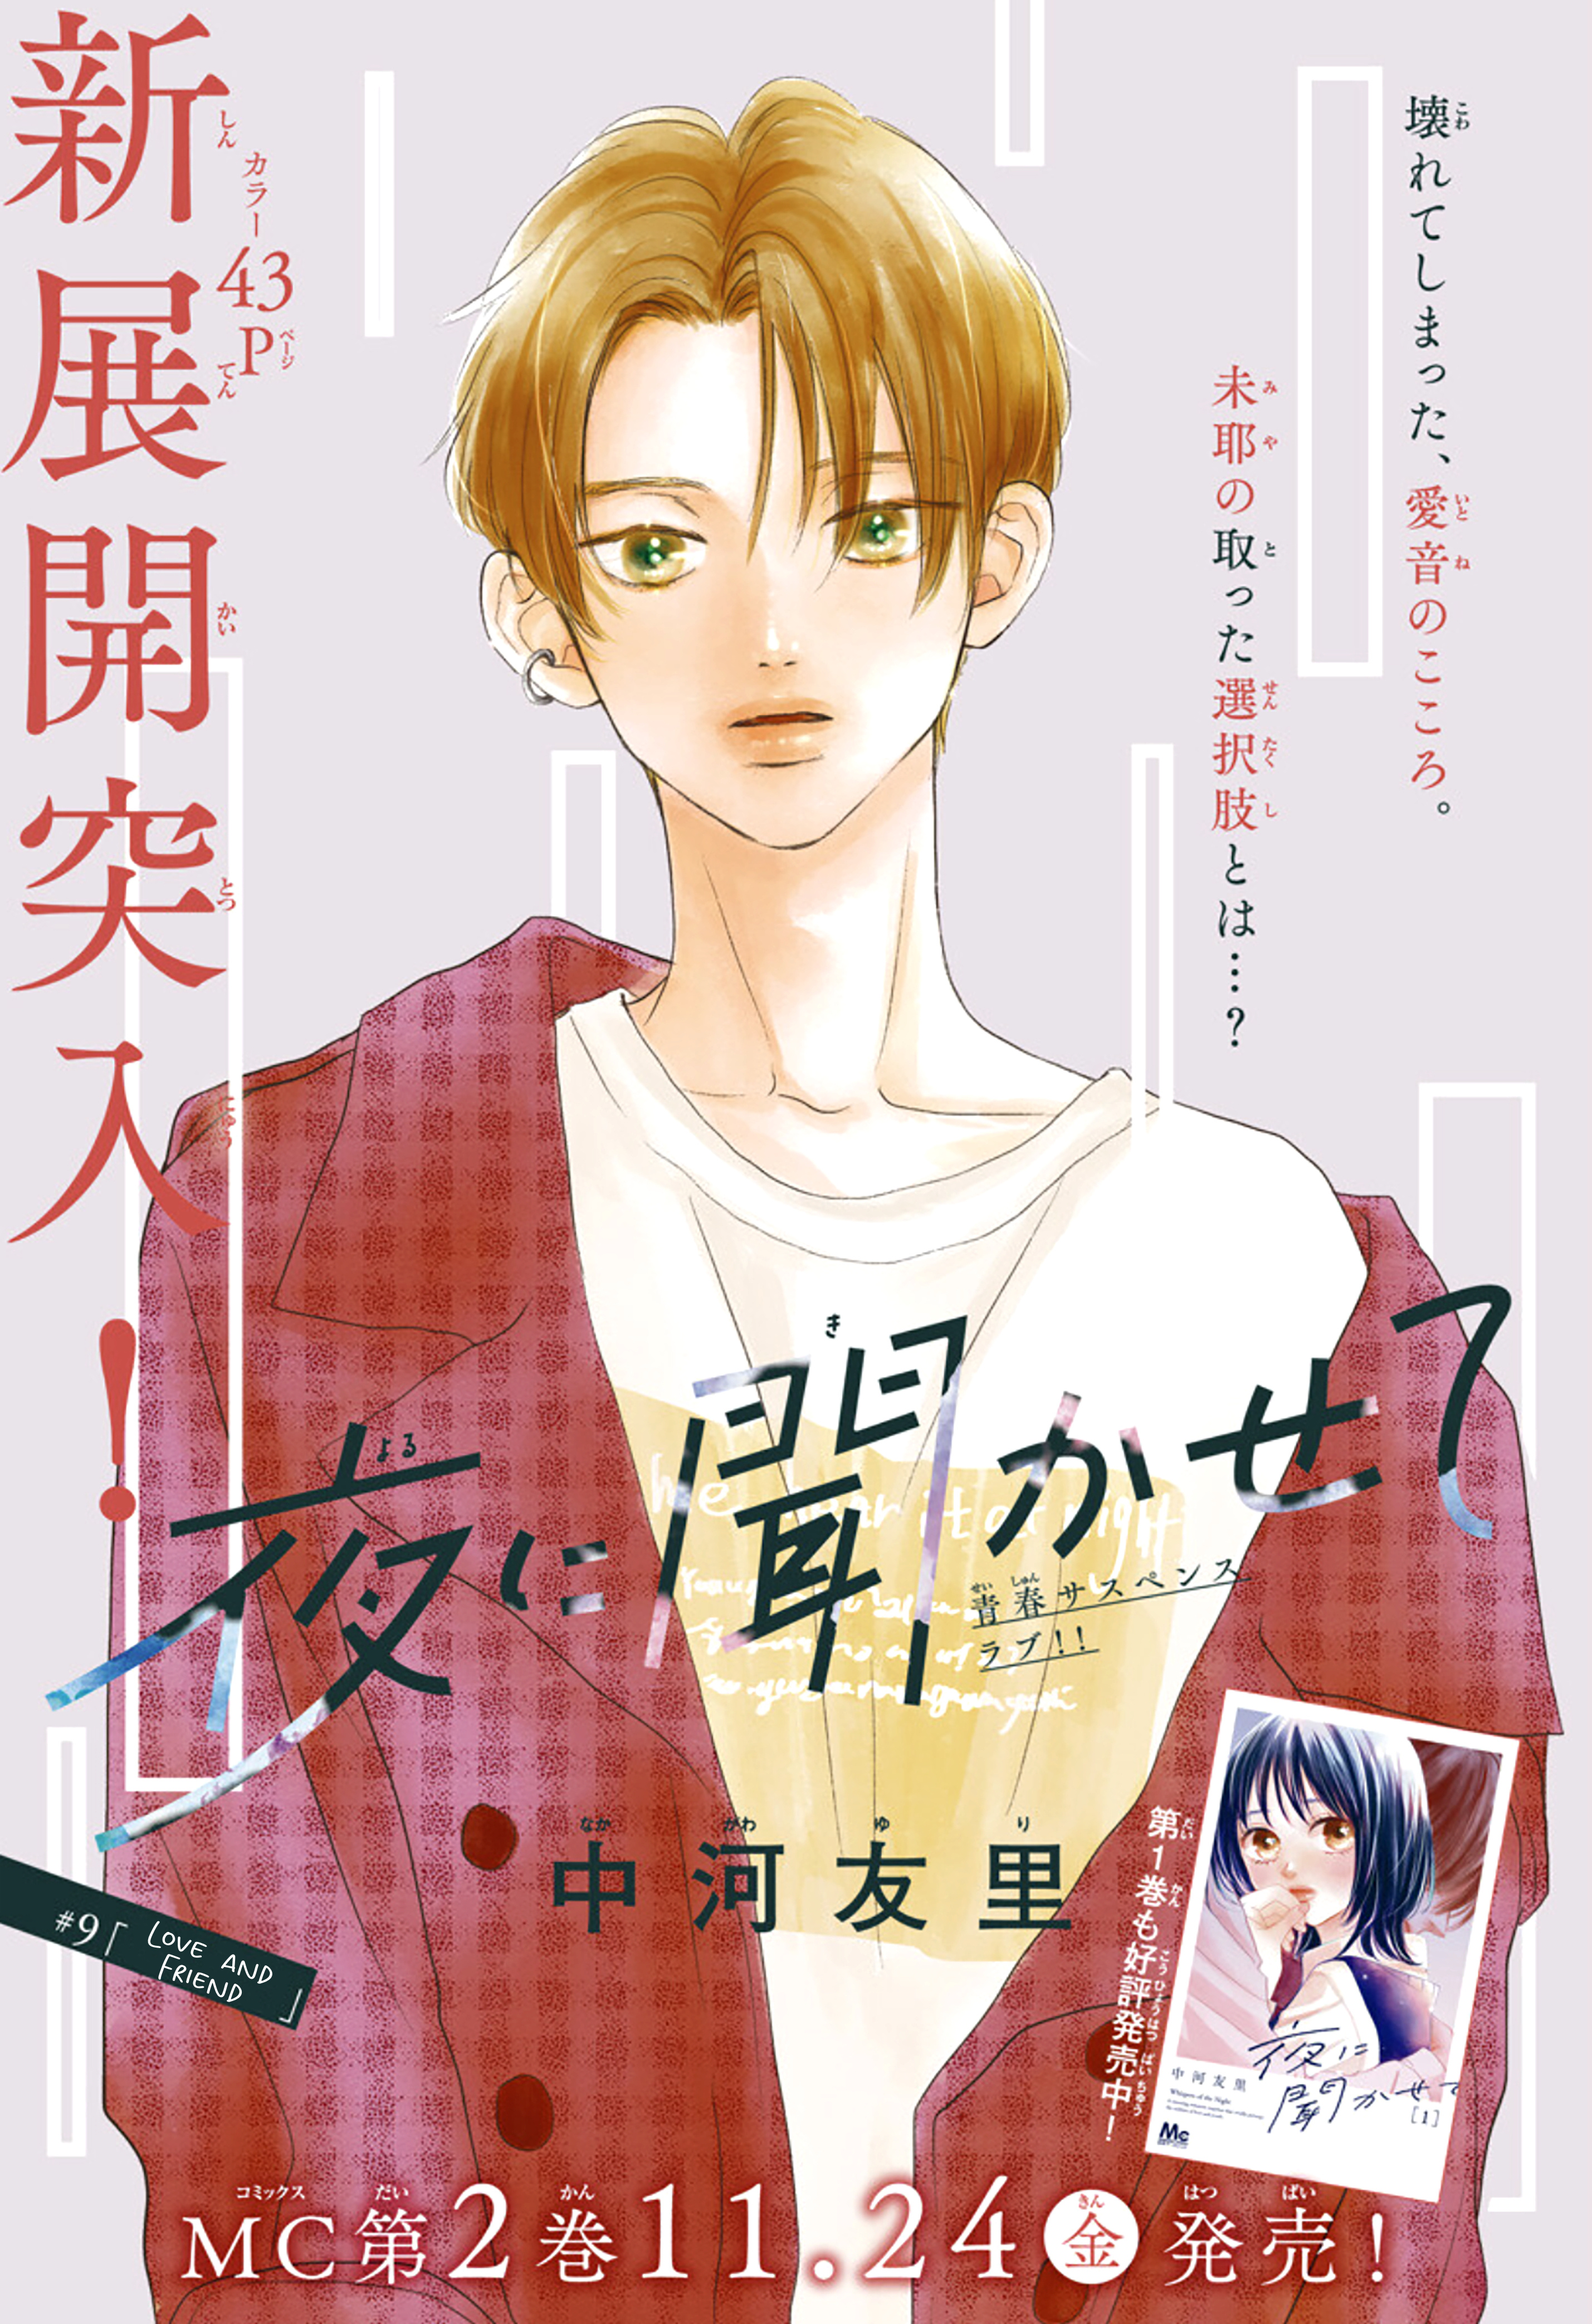 Yoru Ni Kikasete Vol.2 Chapter 9: Love And Friend. - Picture 2